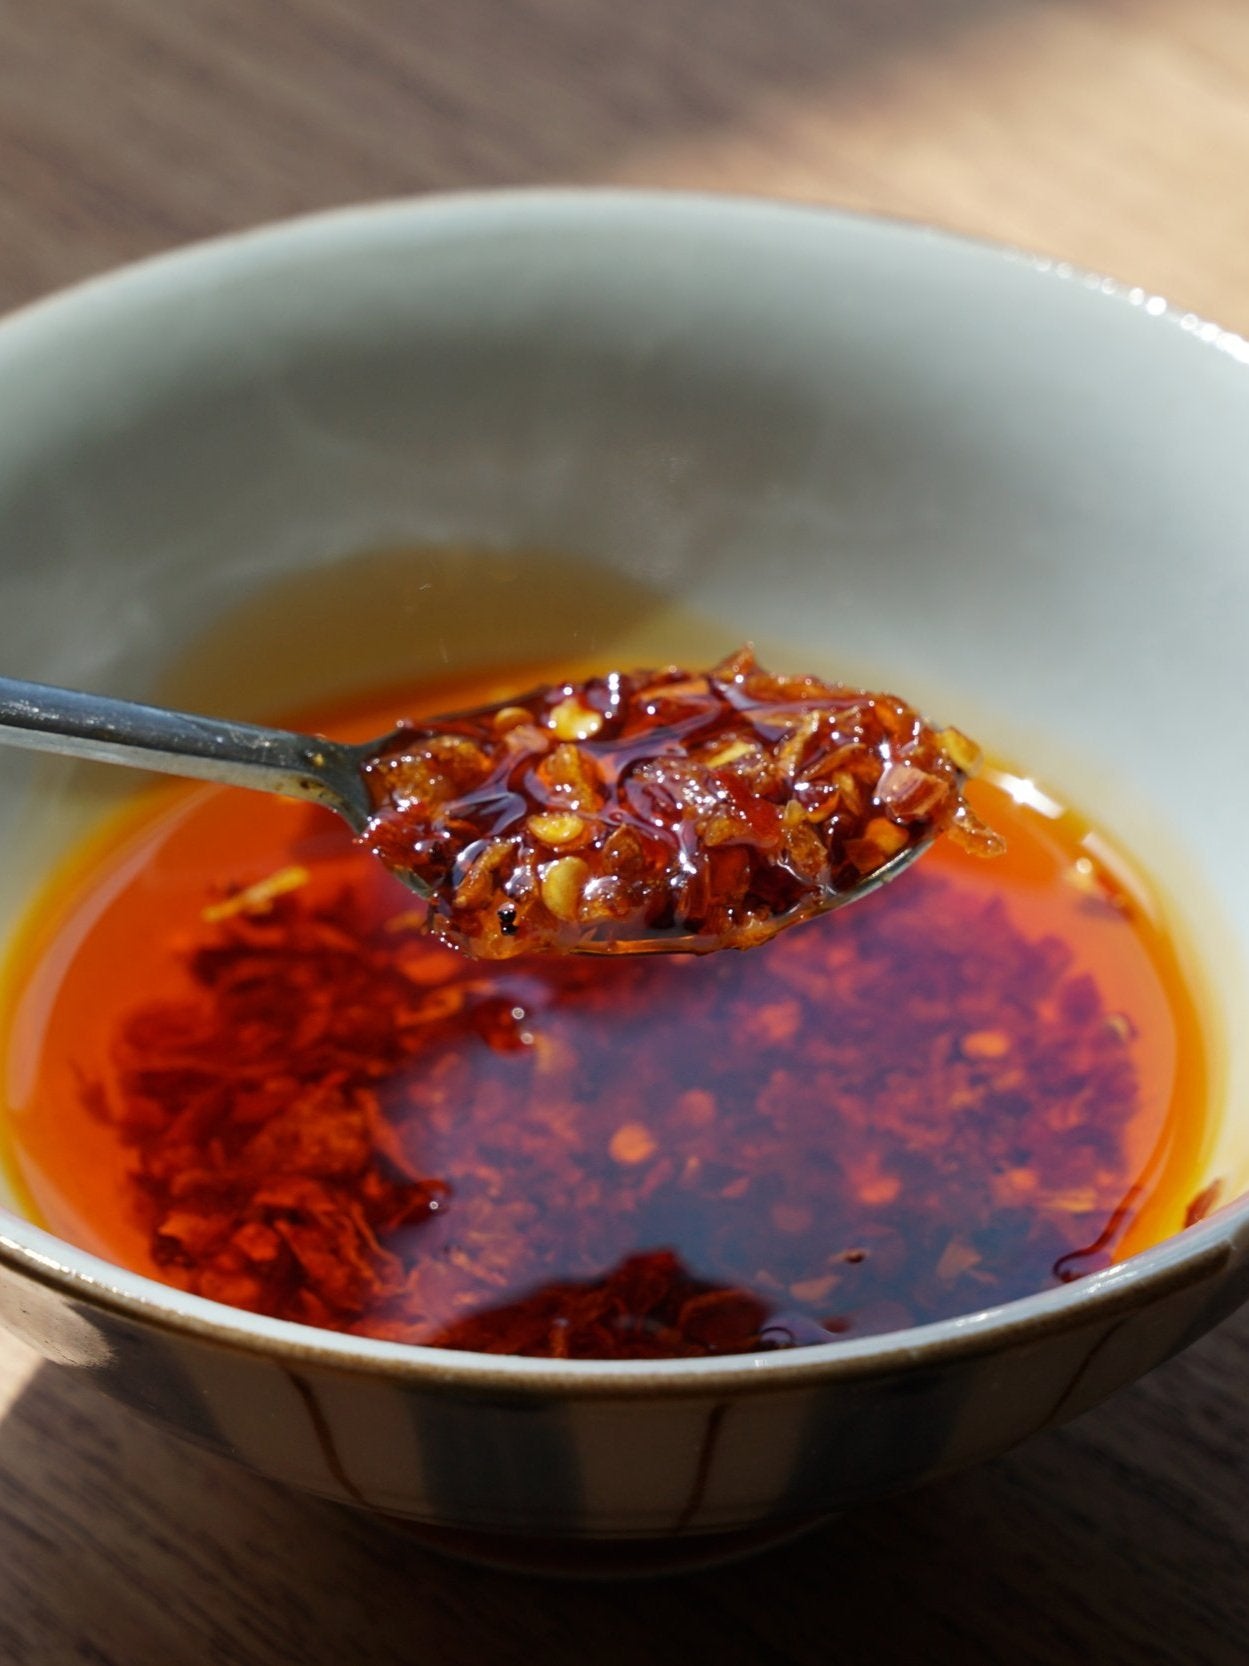 Sichuan Sizzle Chili Crisp Oil